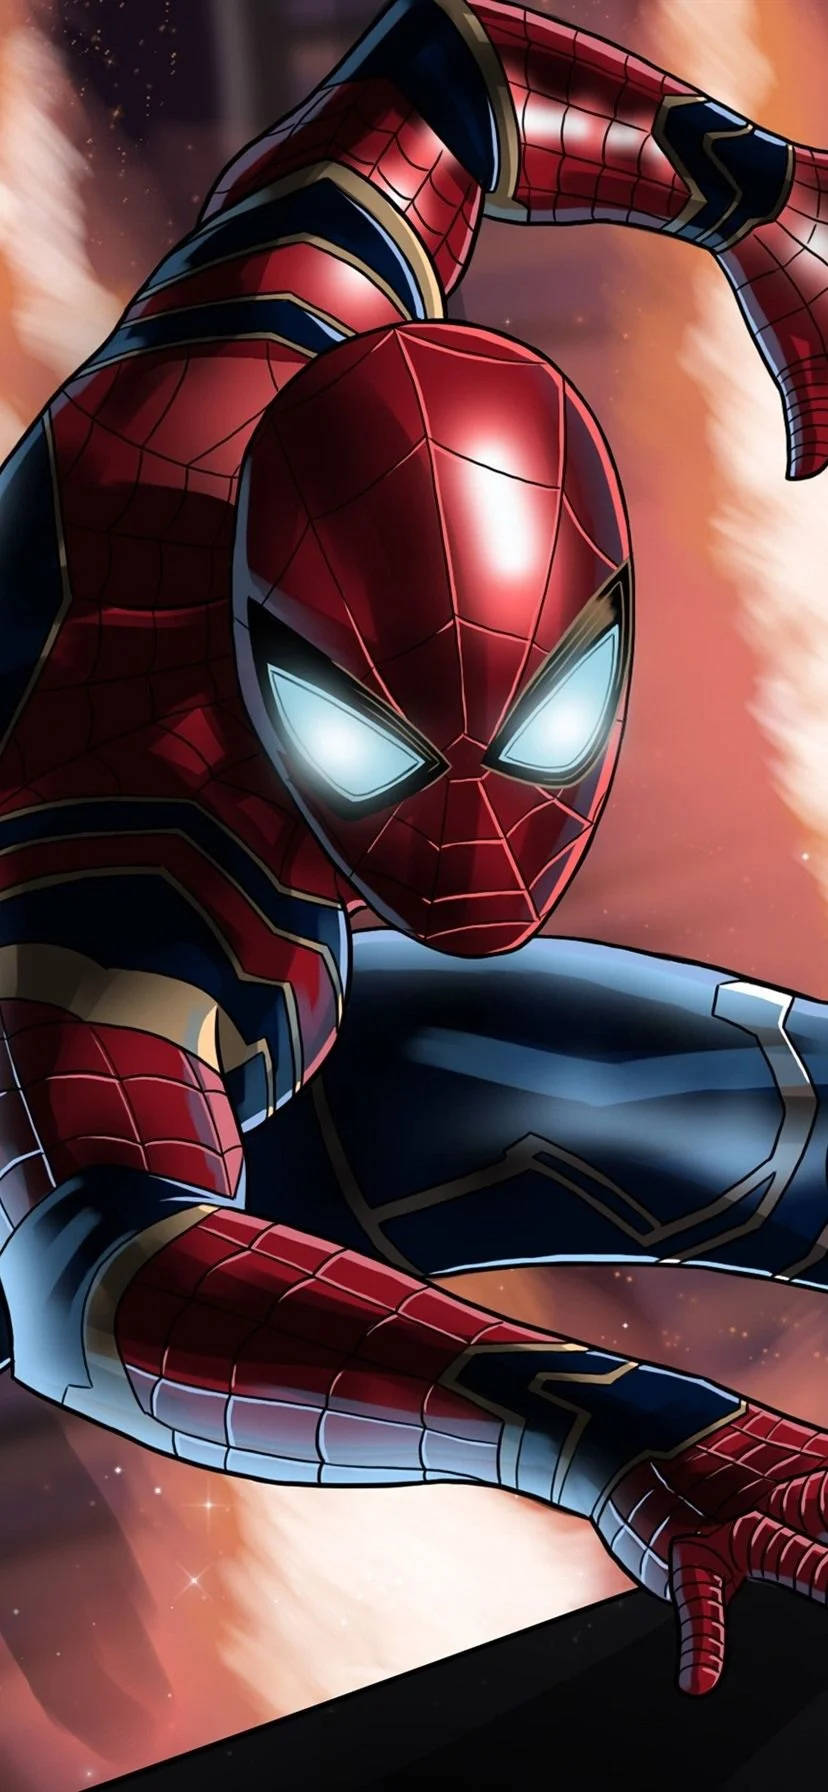 Spider-man Crouched Superhelt Iphone Wallpaper